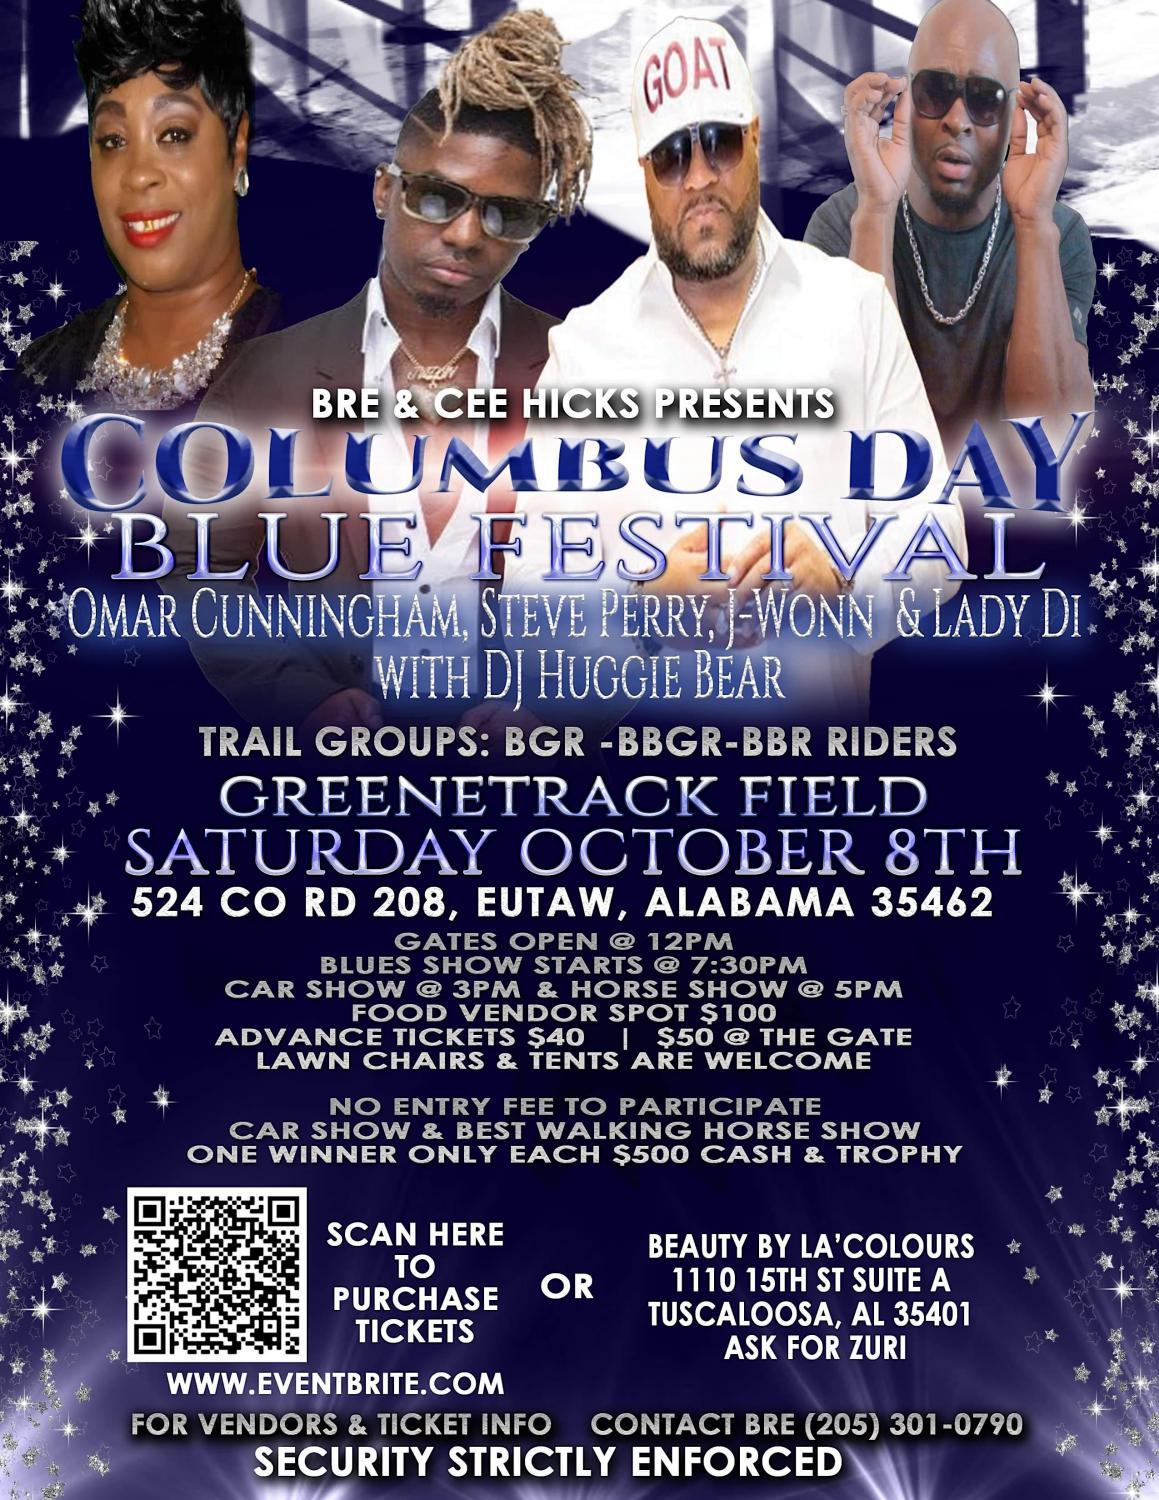 Columbus Day Blues Festival
Sat Oct 8, 12:00 PM - Sat Oct 8, 11:00 PM